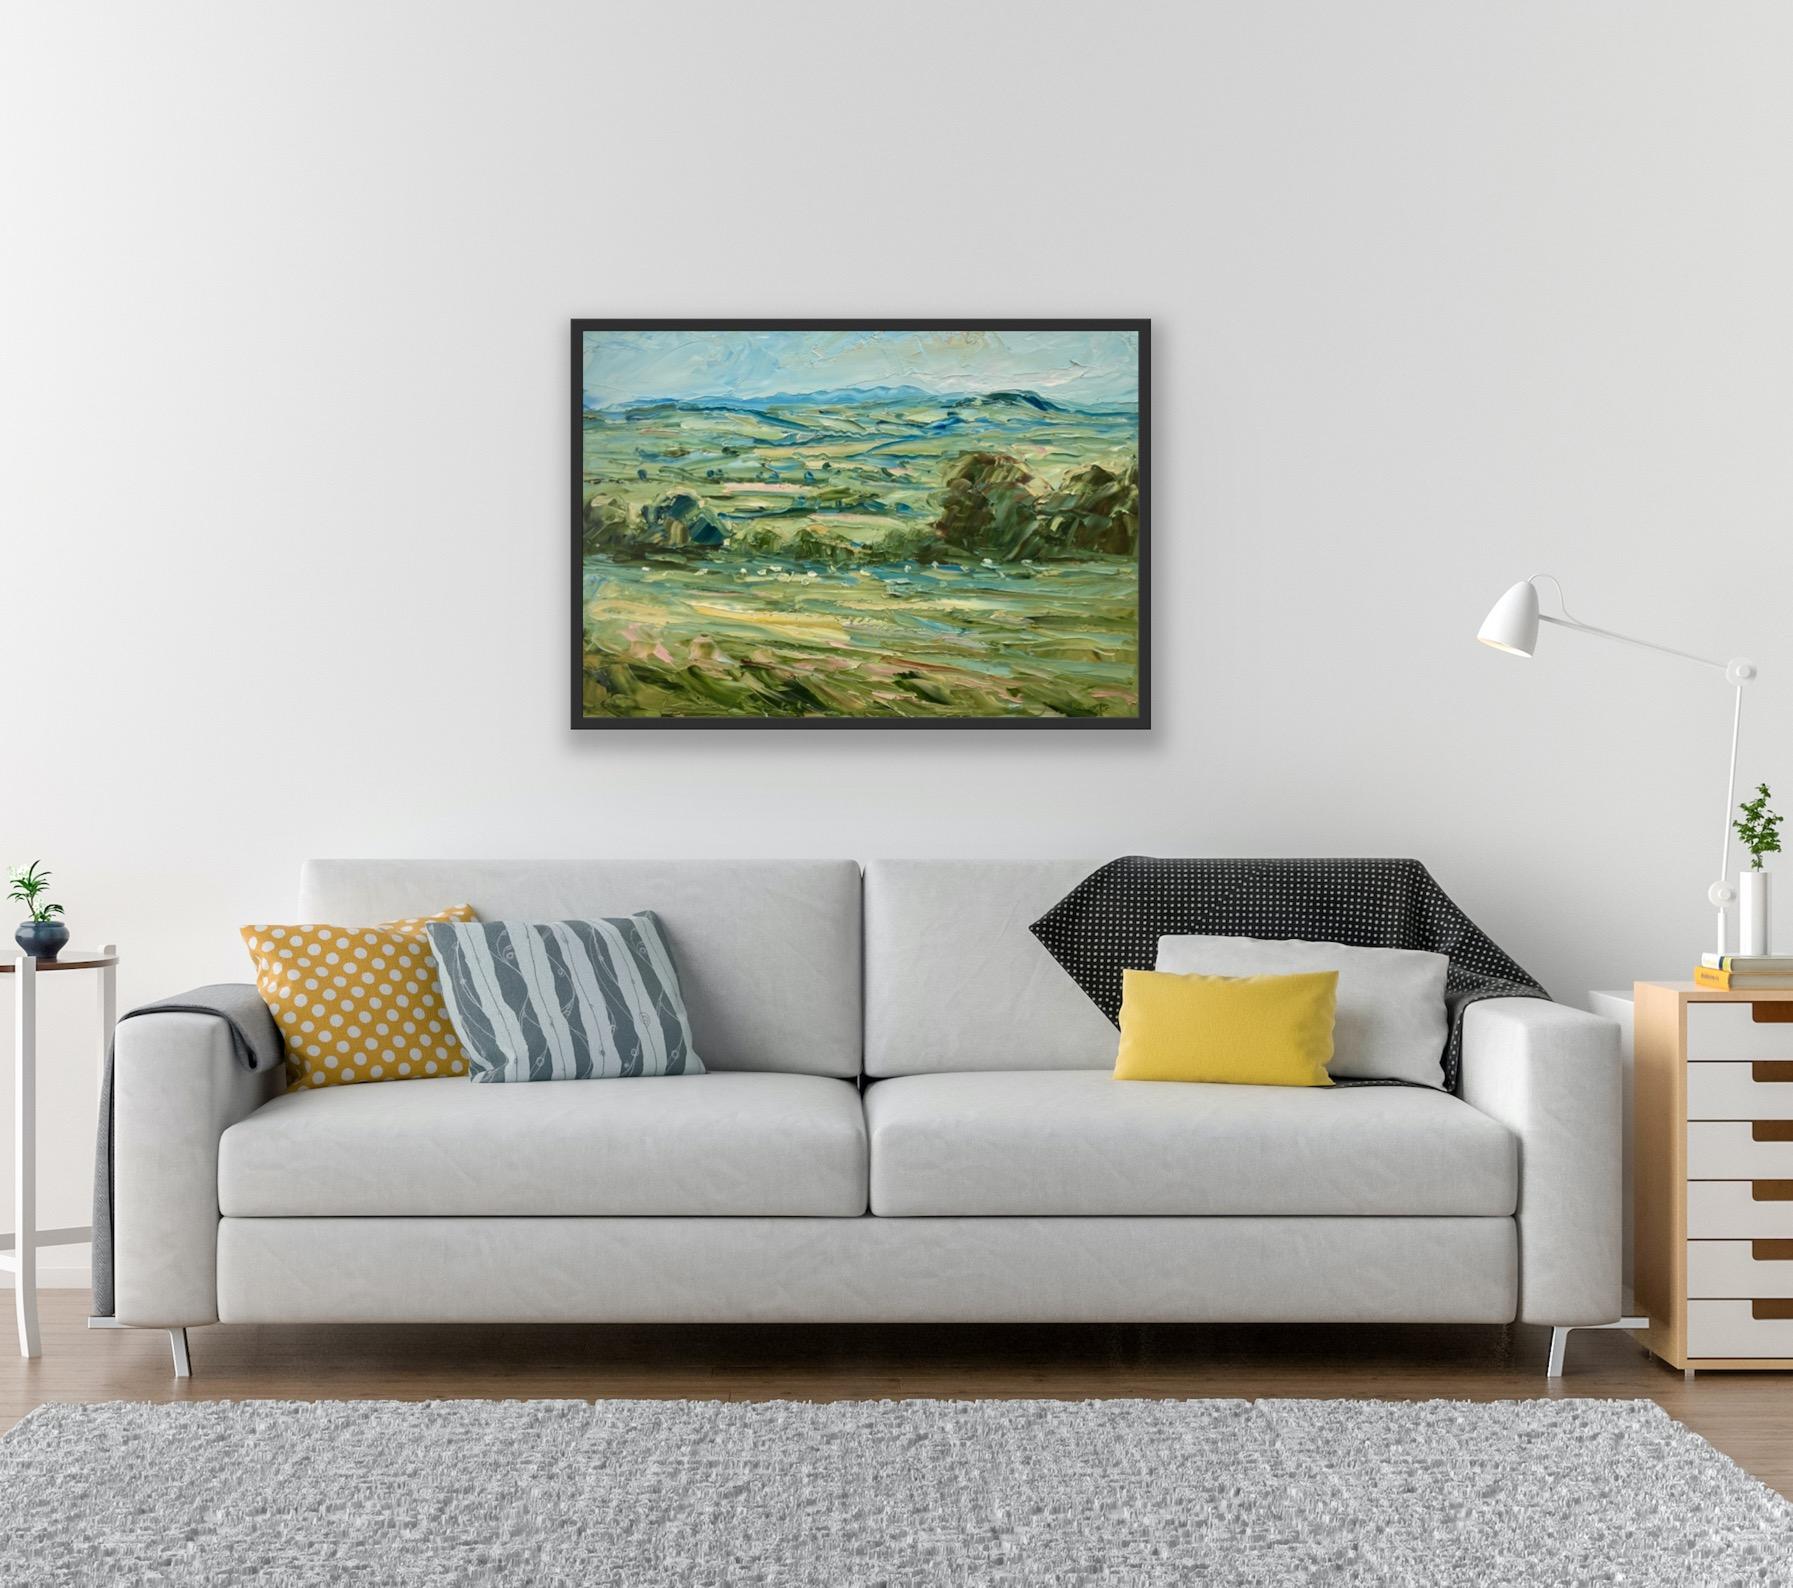 Towards the Malvern Hills by Rupert Aker, Landscape art, Impressionist, Impasto - Painting by Rupert Aker 